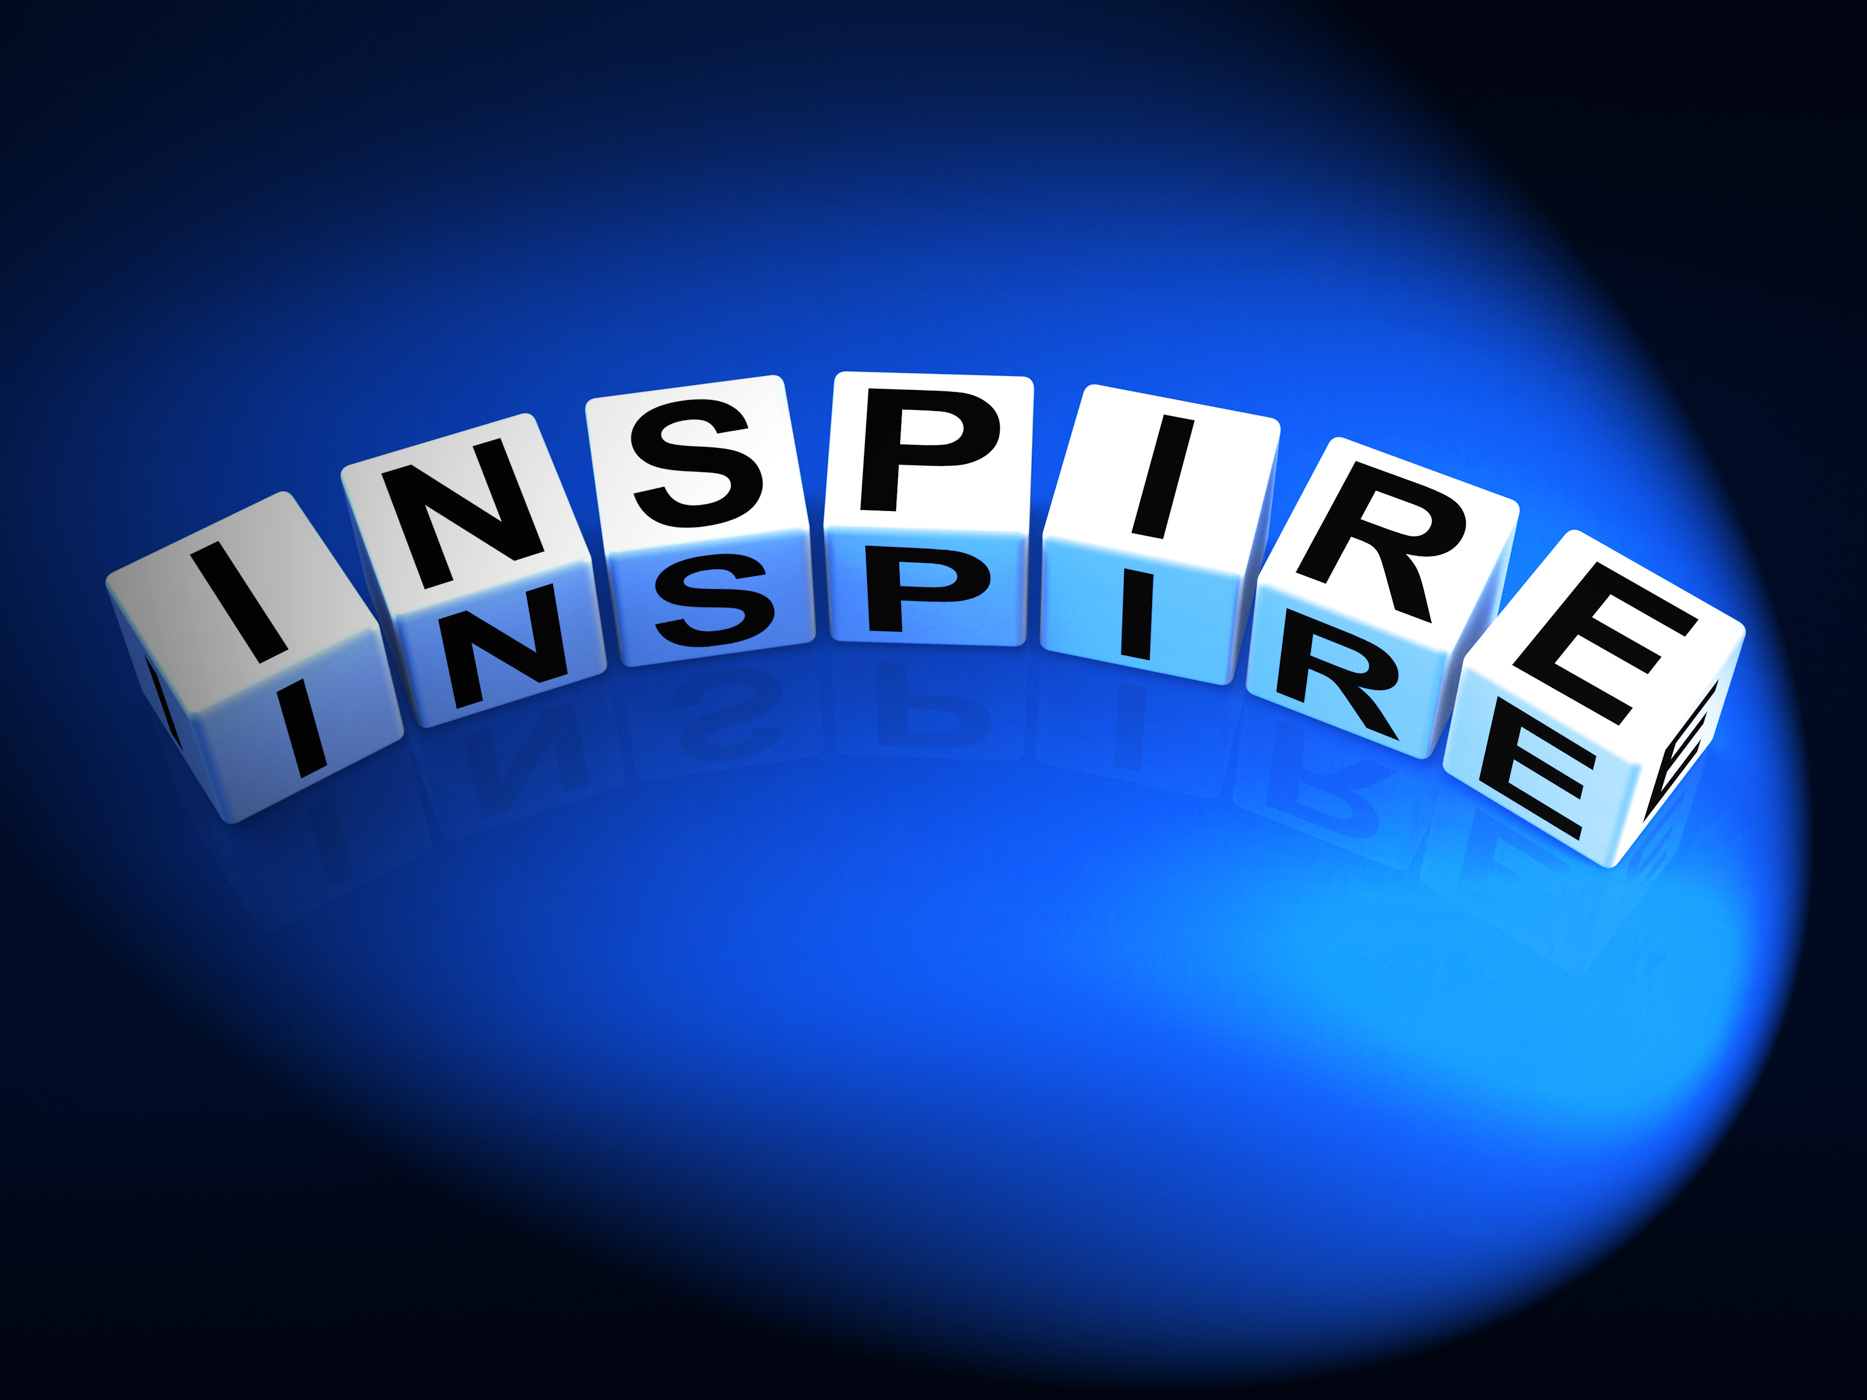 Inspire dice show inspiration motivation and invigoration photo